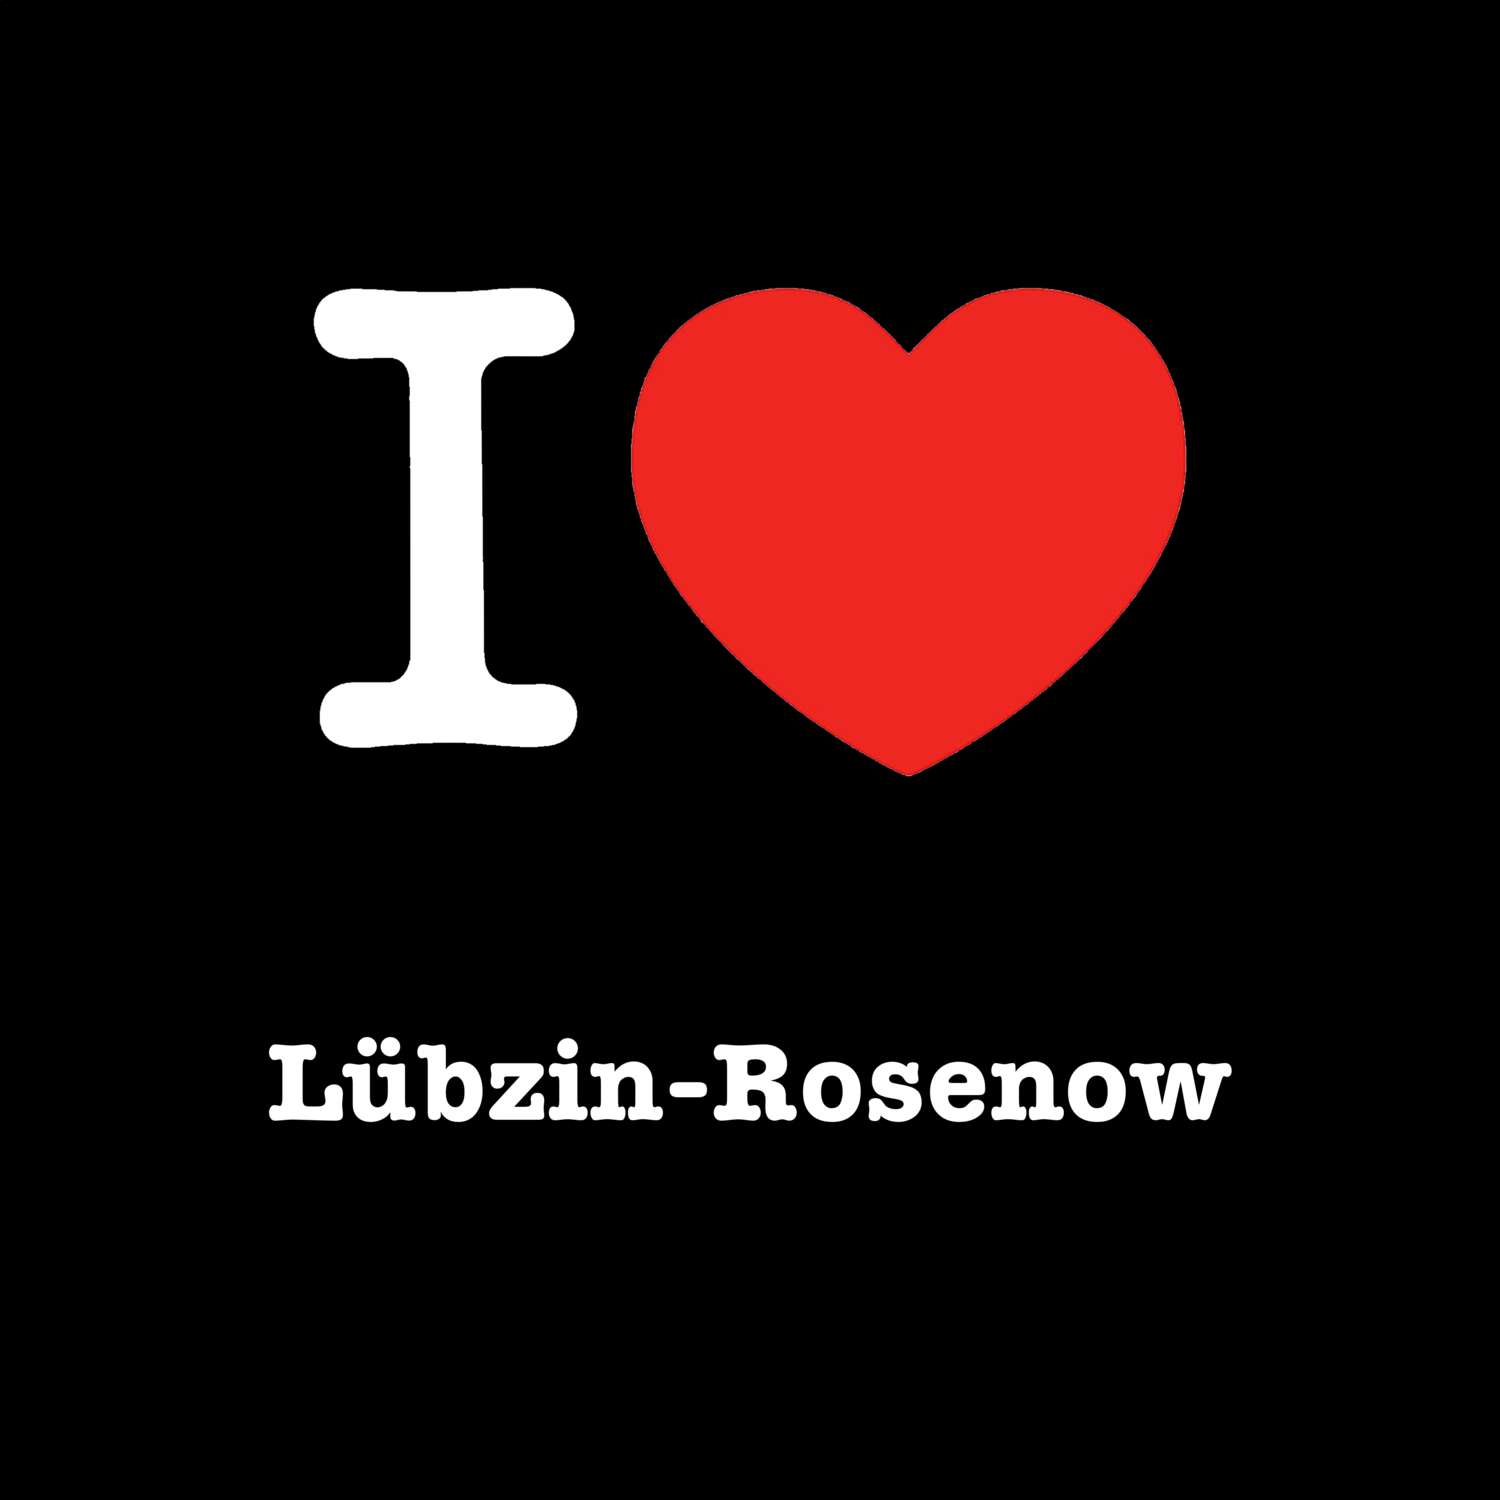 Lübzin-Rosenow T-Shirt »I love«